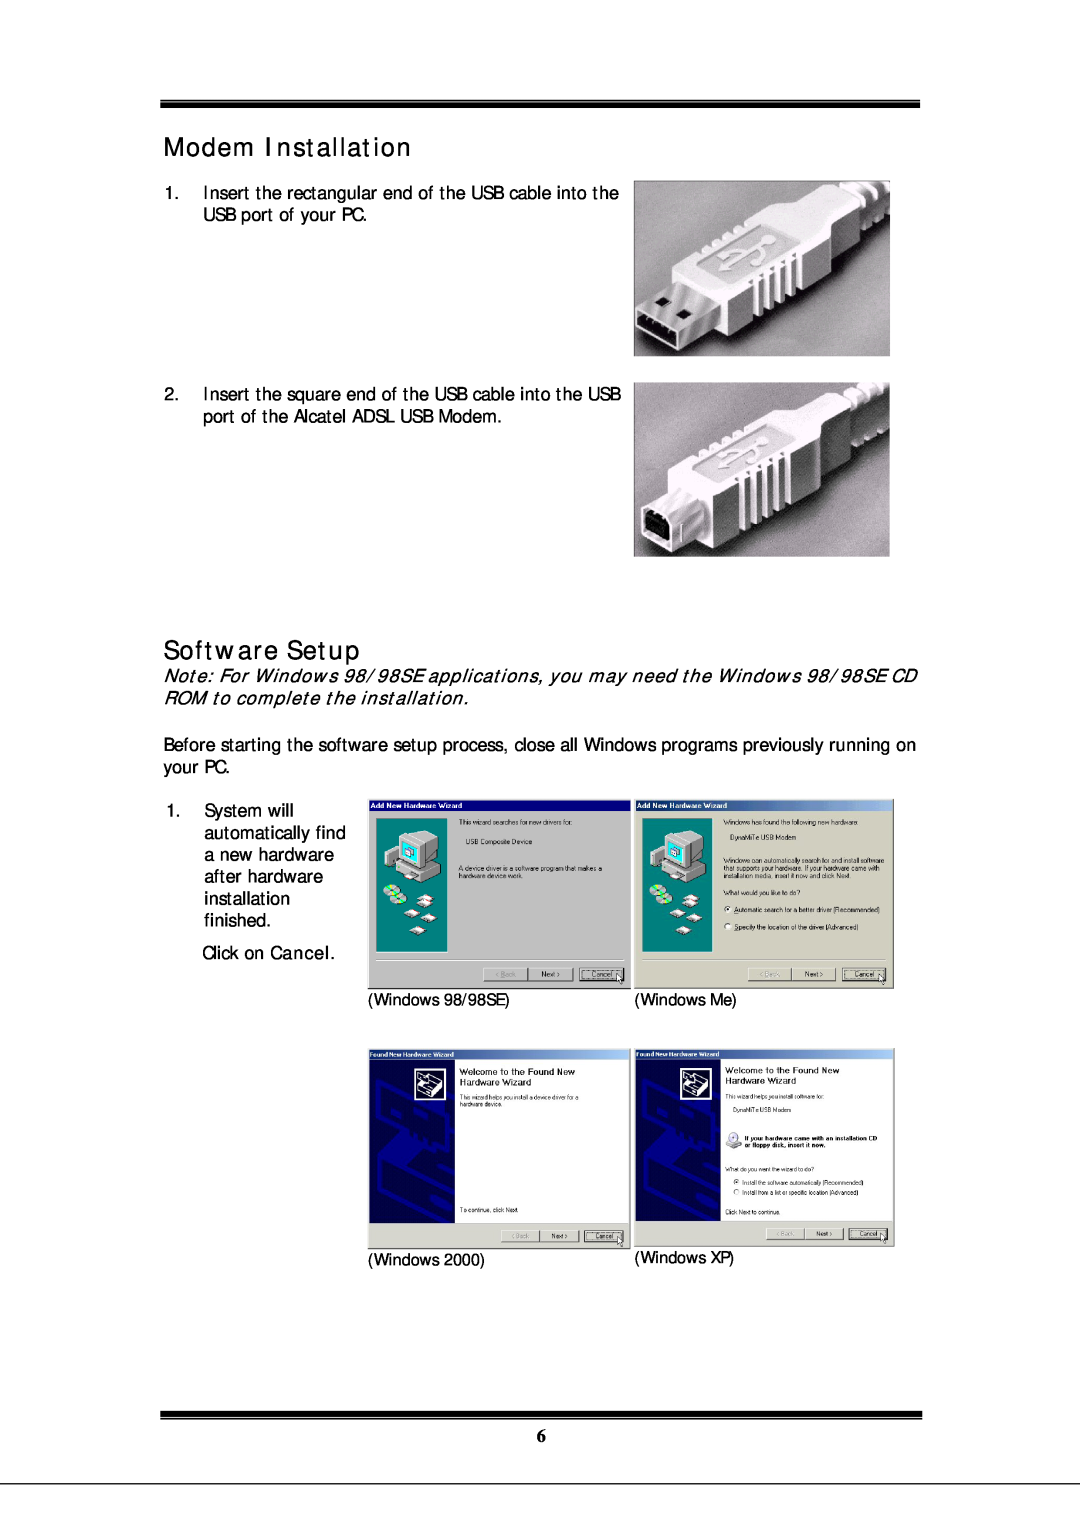 Microsoft EA900 manual Modem Installation, Software Setup 